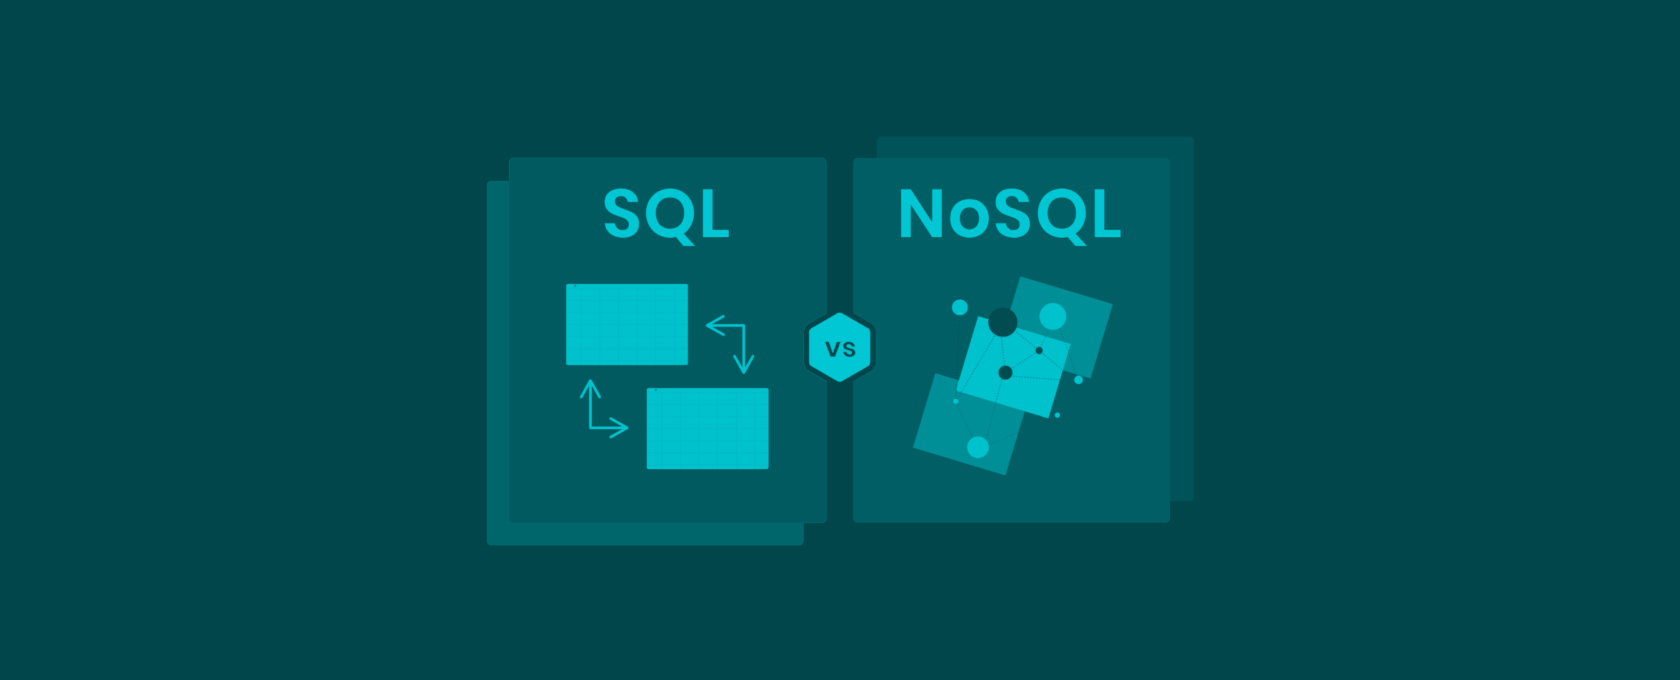 Nosql chat database SQL versus